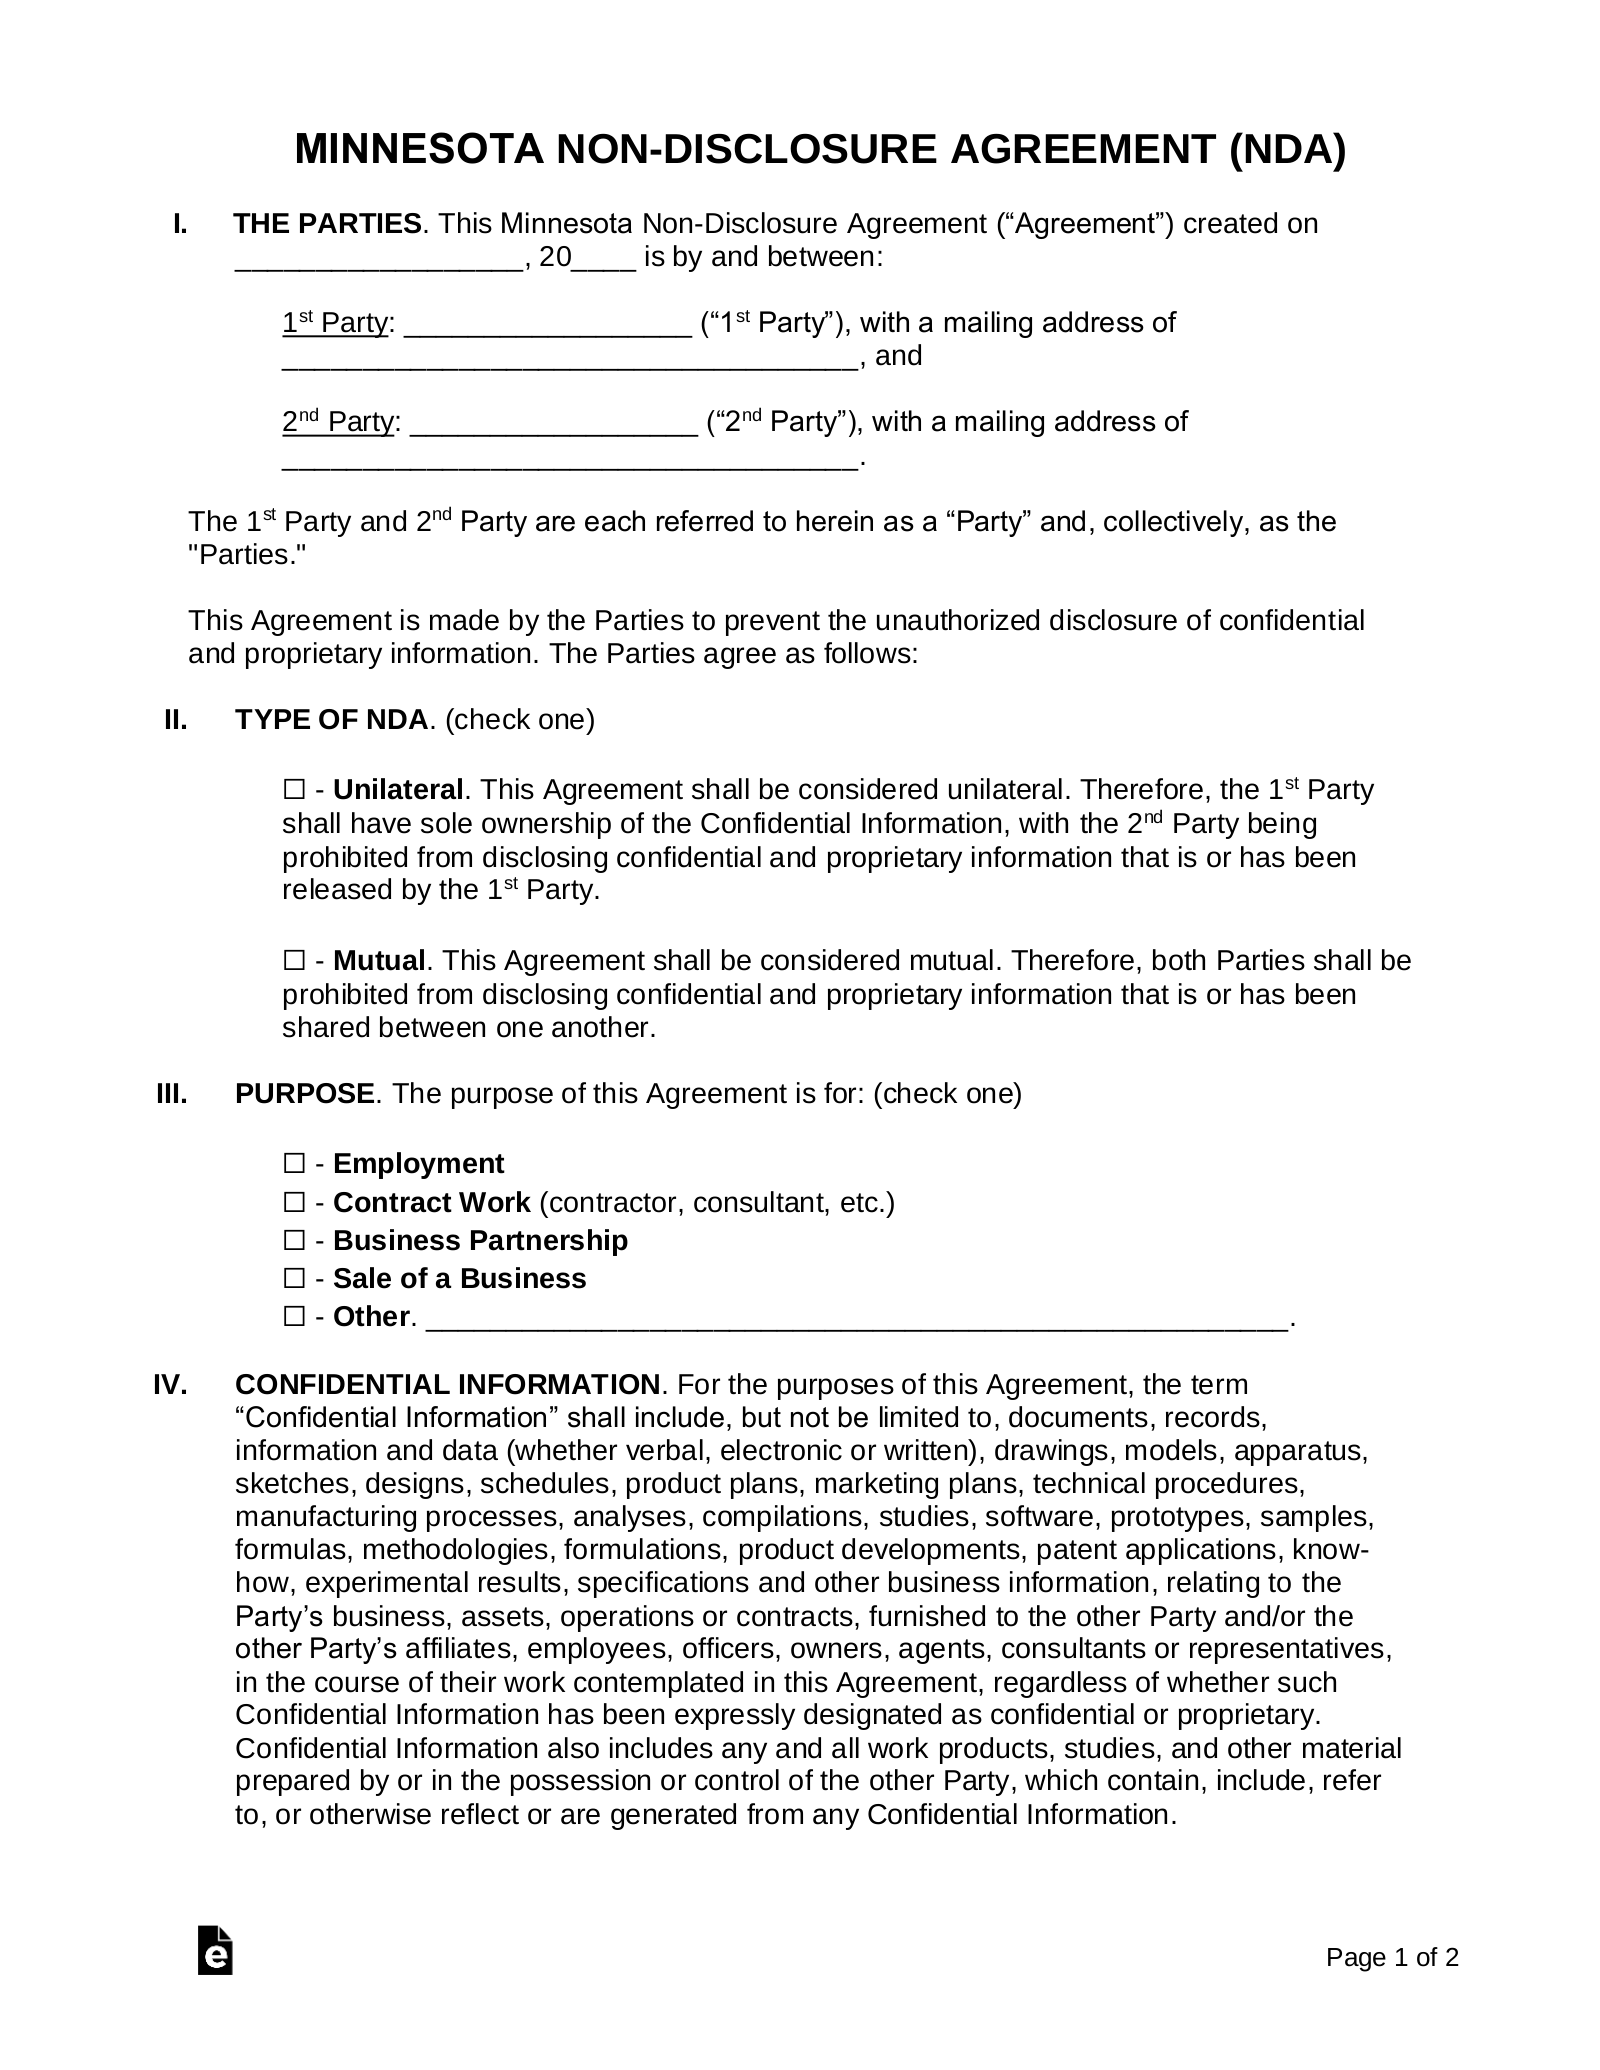 Minnesota Non-Disclosure Agreement (NDA) Template